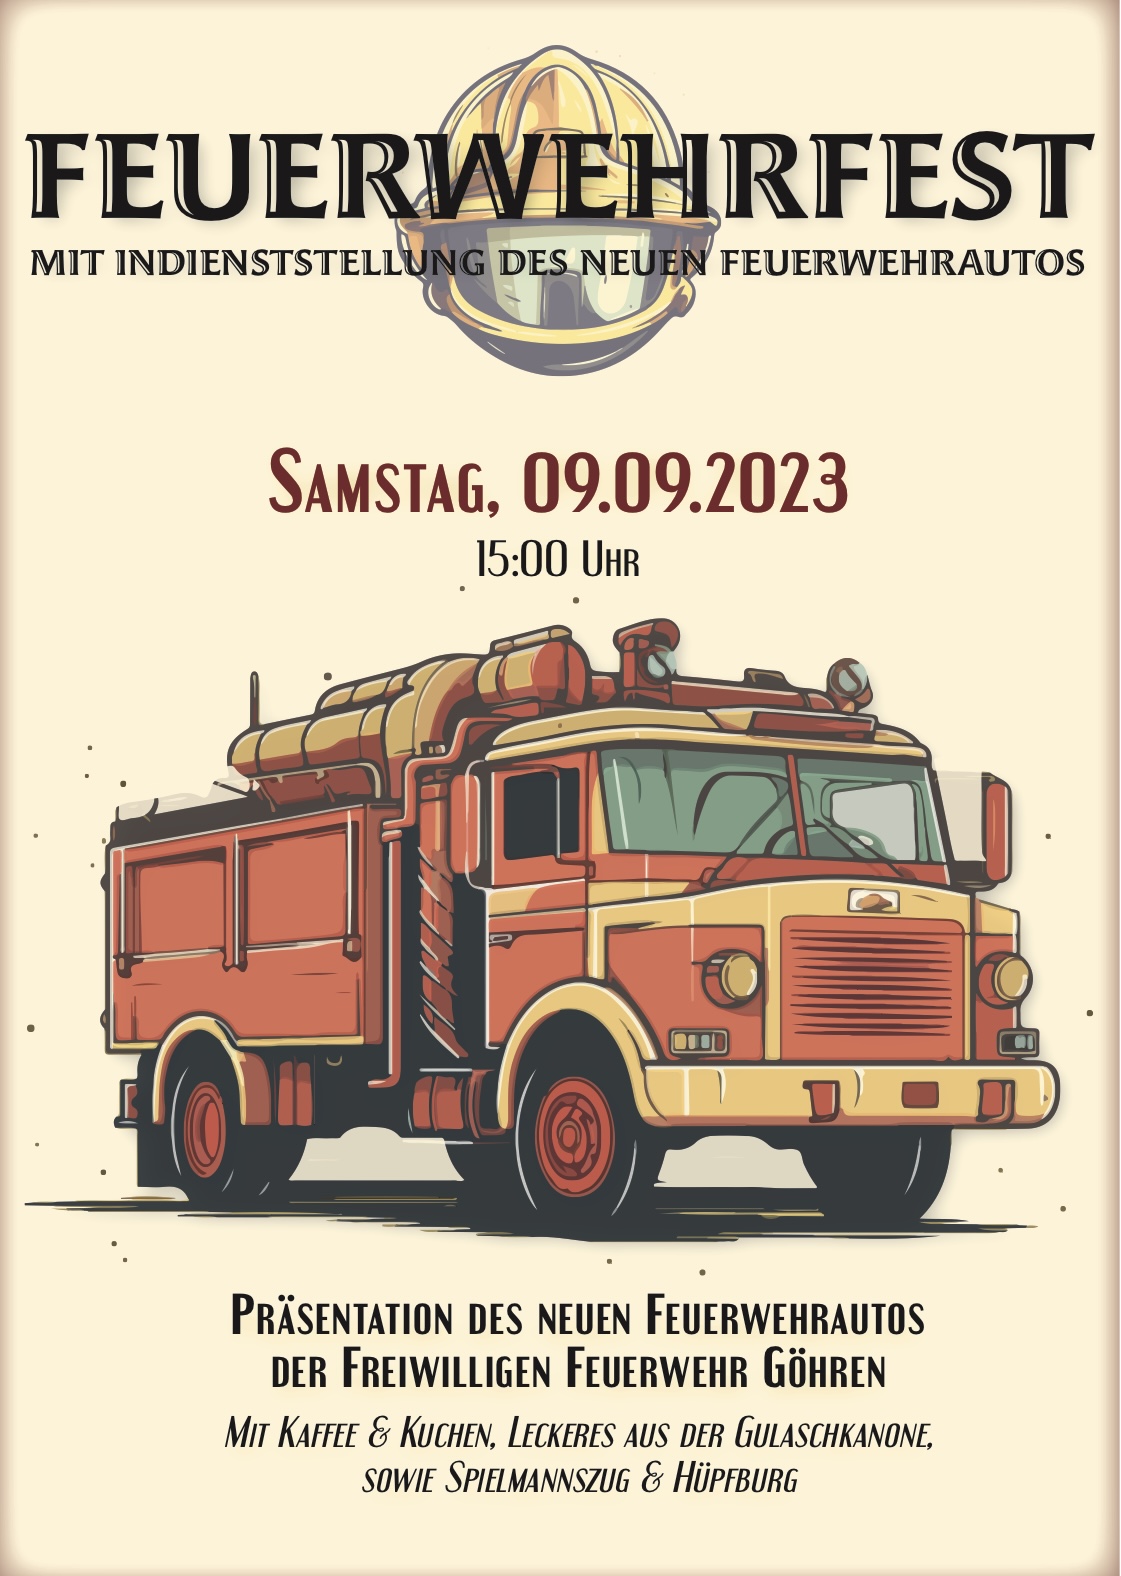 Feuerwehrfest 2023